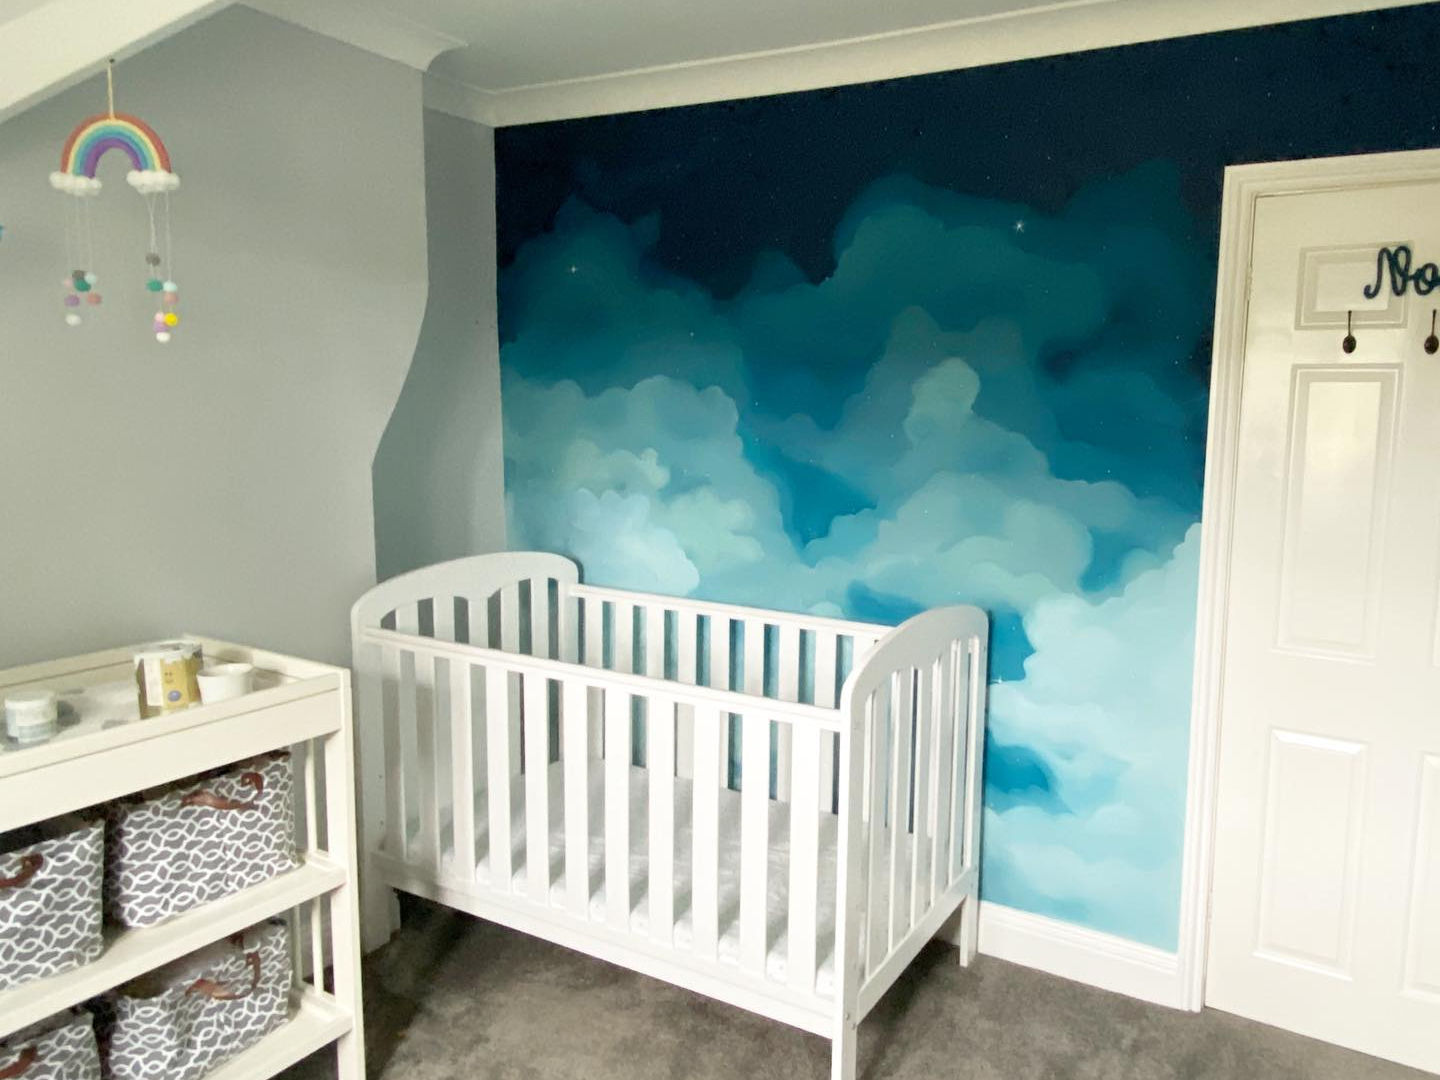 Dreamy nursery bedroom cloudy sky at night